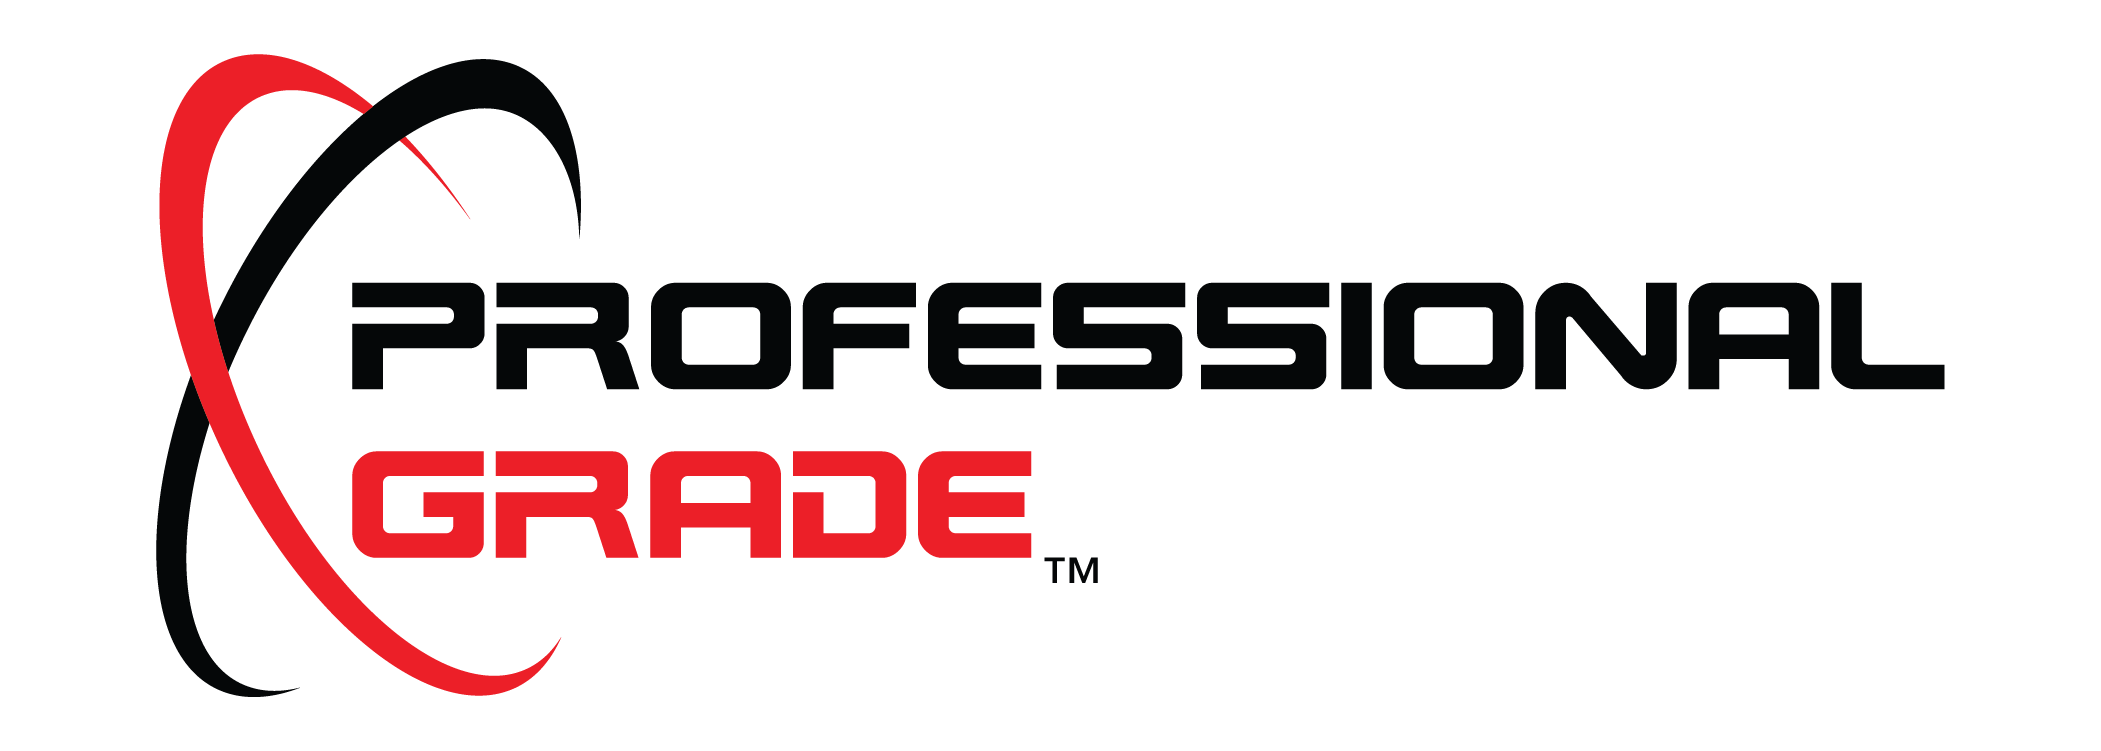 Professional Grade Logo (BR)